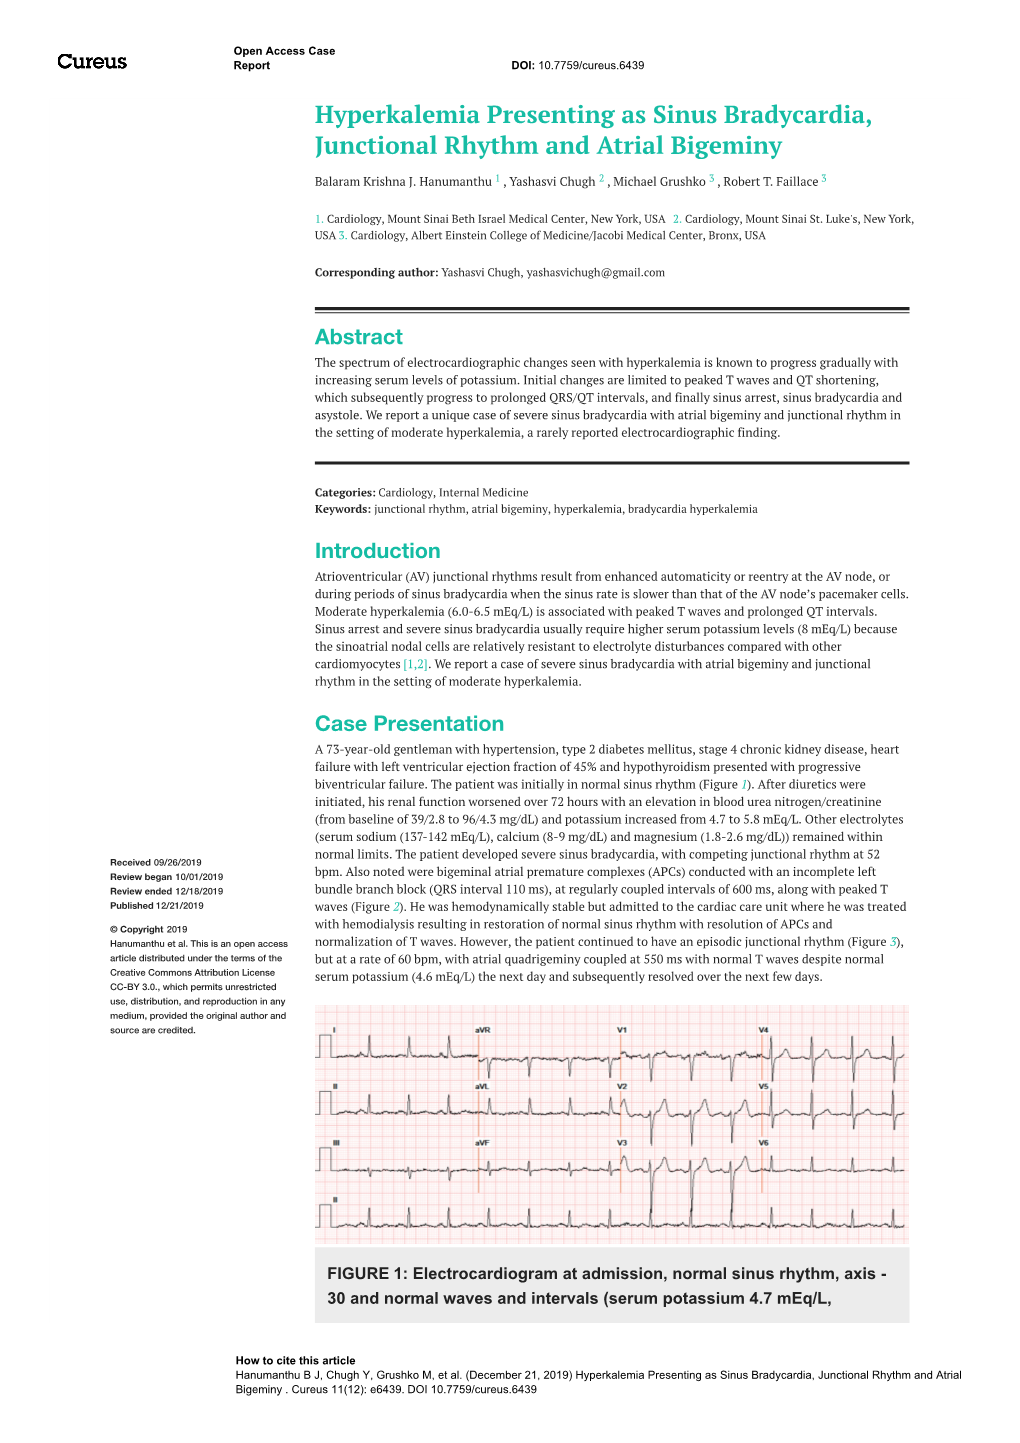 Hyperkalemia Presenting As Sinus Bradycardia, Junctional Rhythm and Atrial Bigeminy